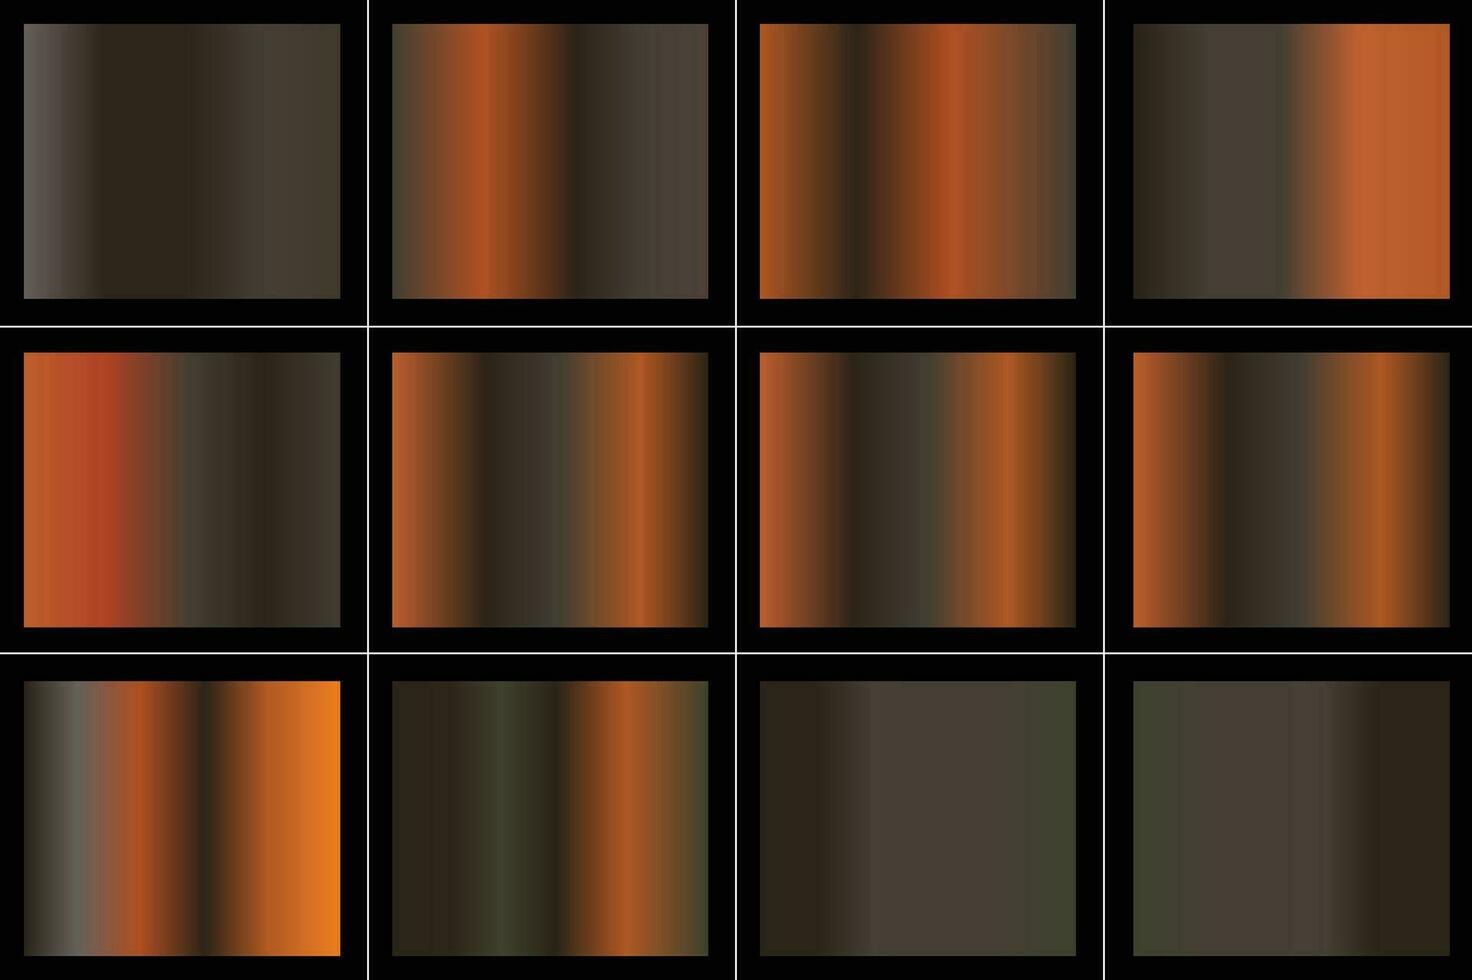 livre cores vetores gradientes amostras paleta vetor